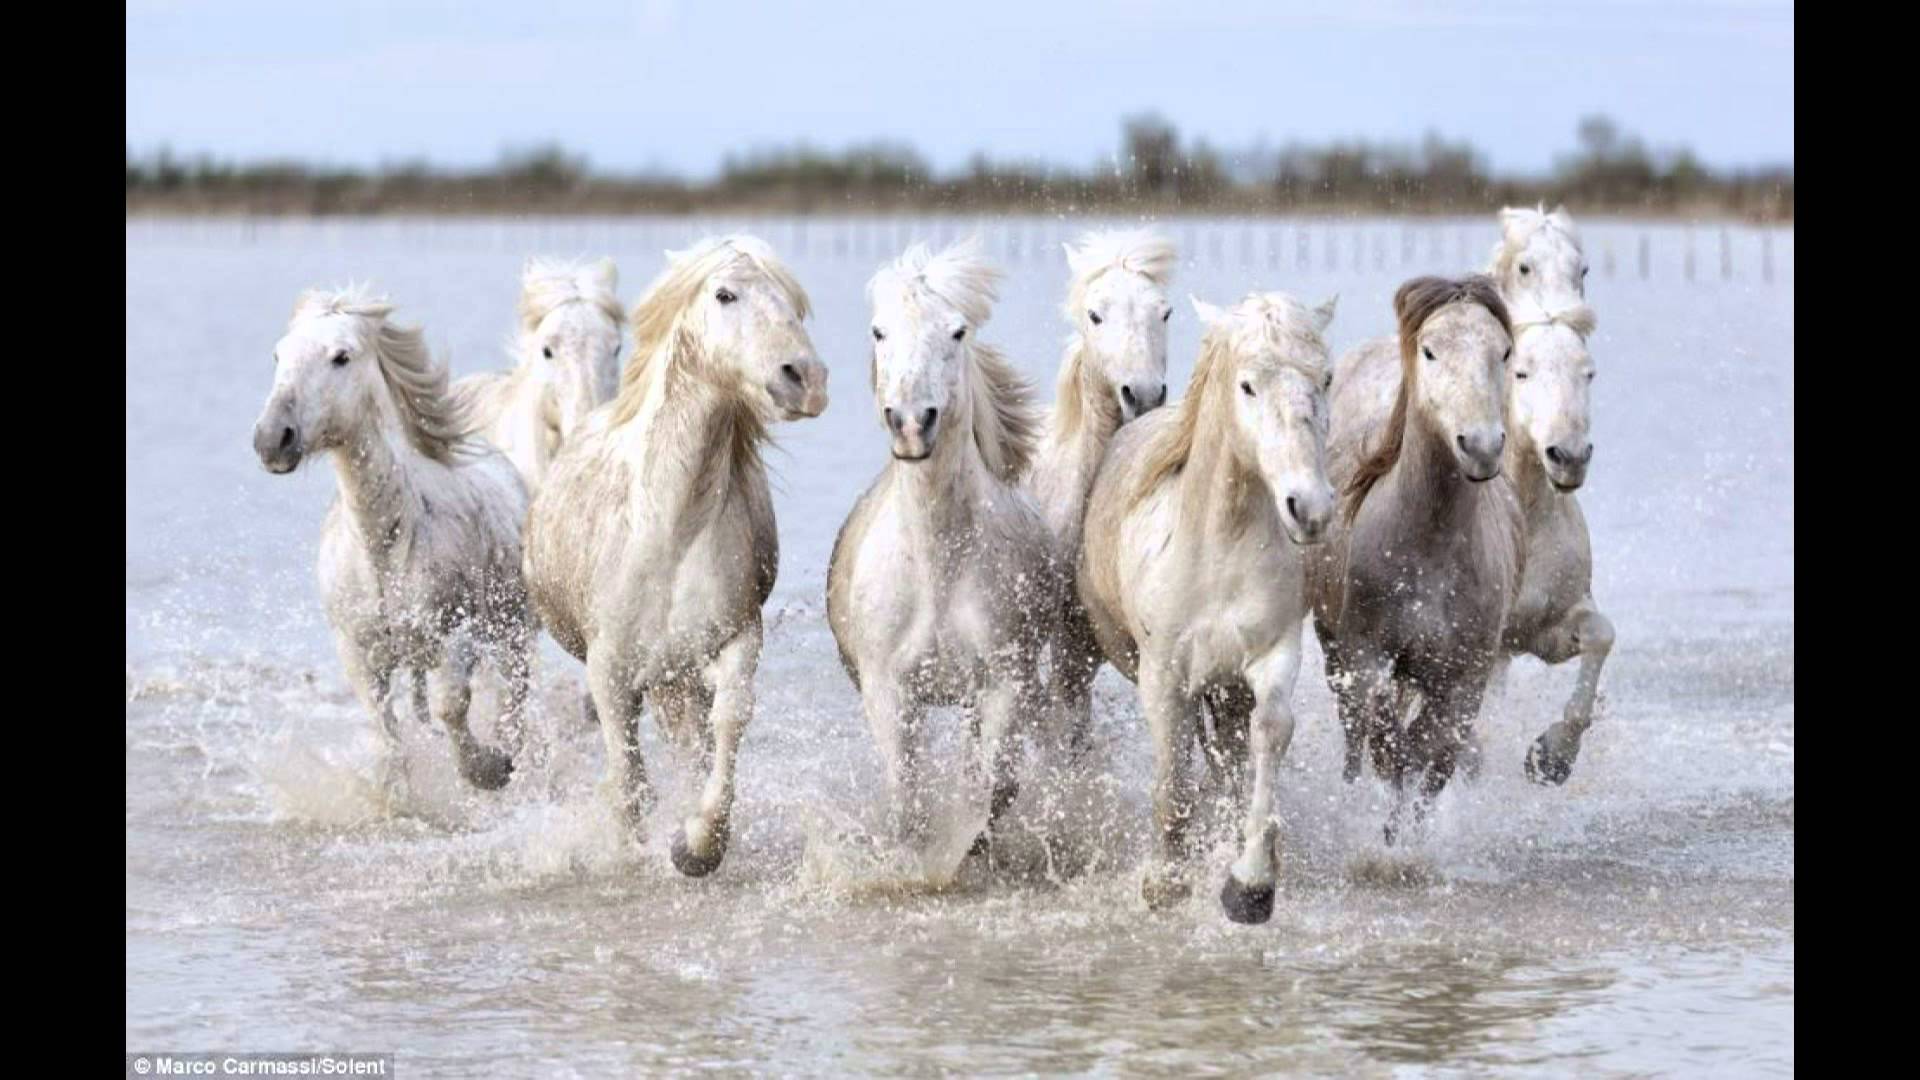 The real life unicorns Magical shots of wild white horses racing